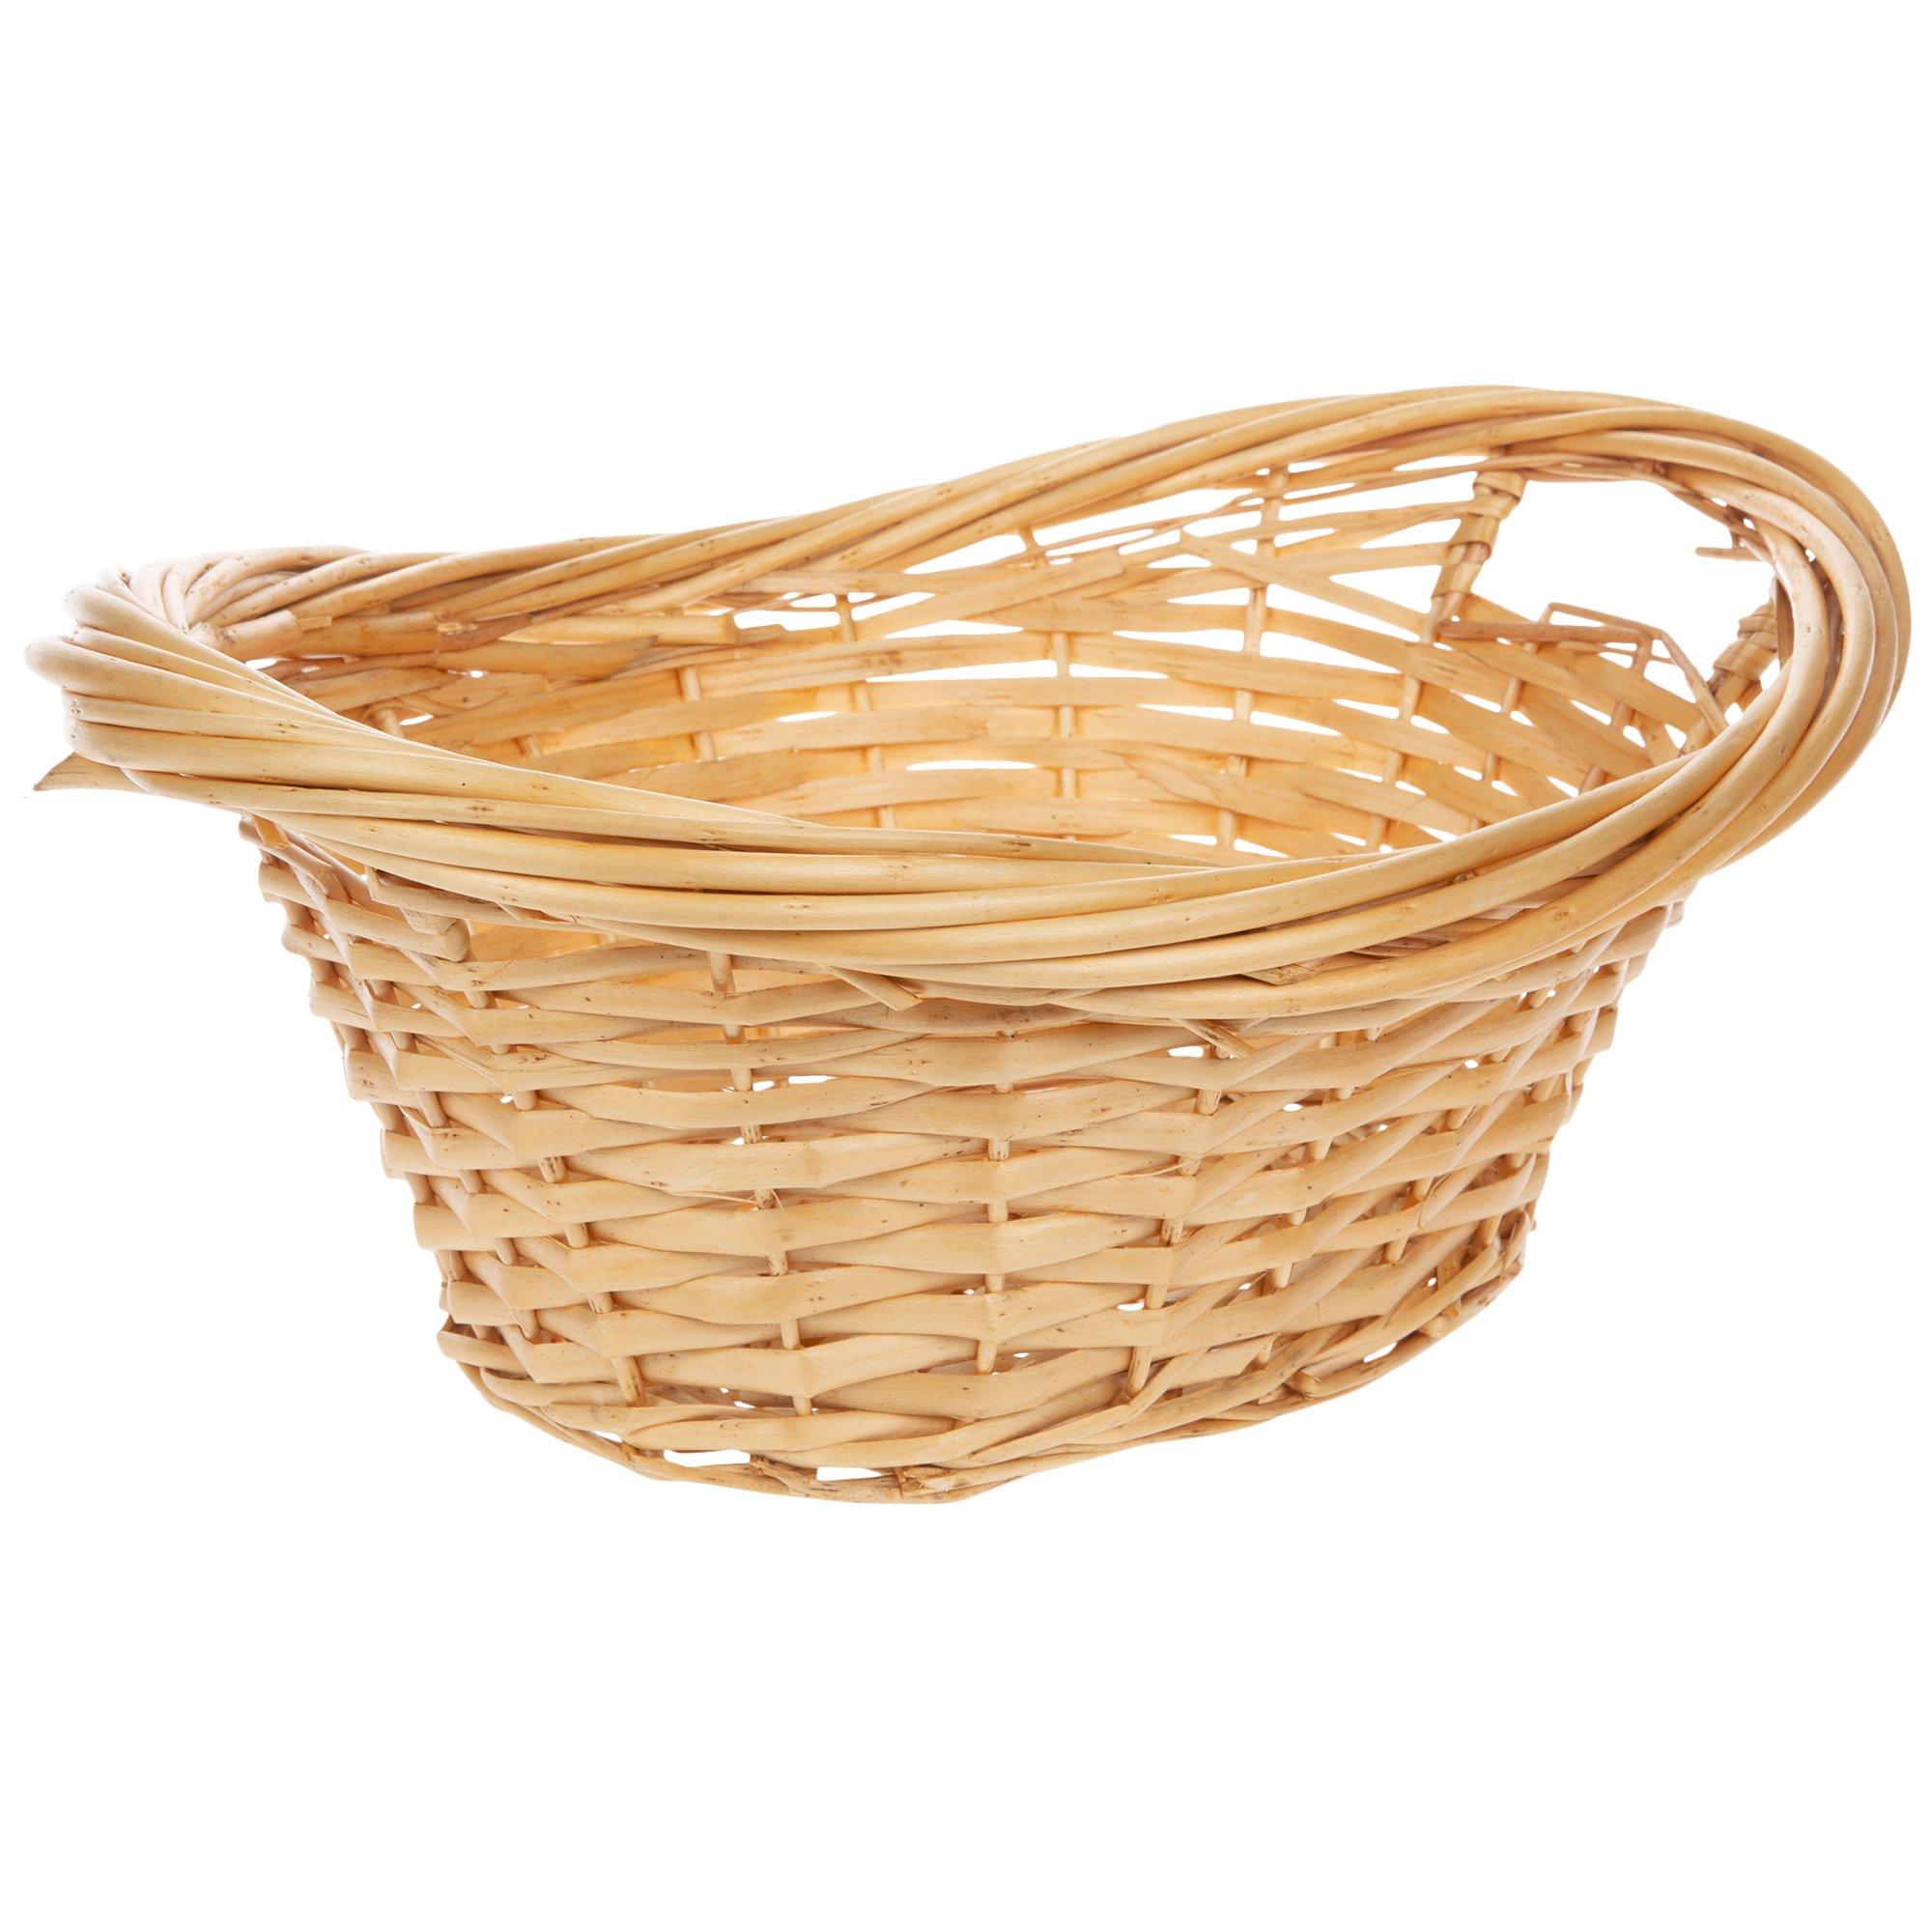 Oval Natural Wicker Basket - 23L x 18D x 5H